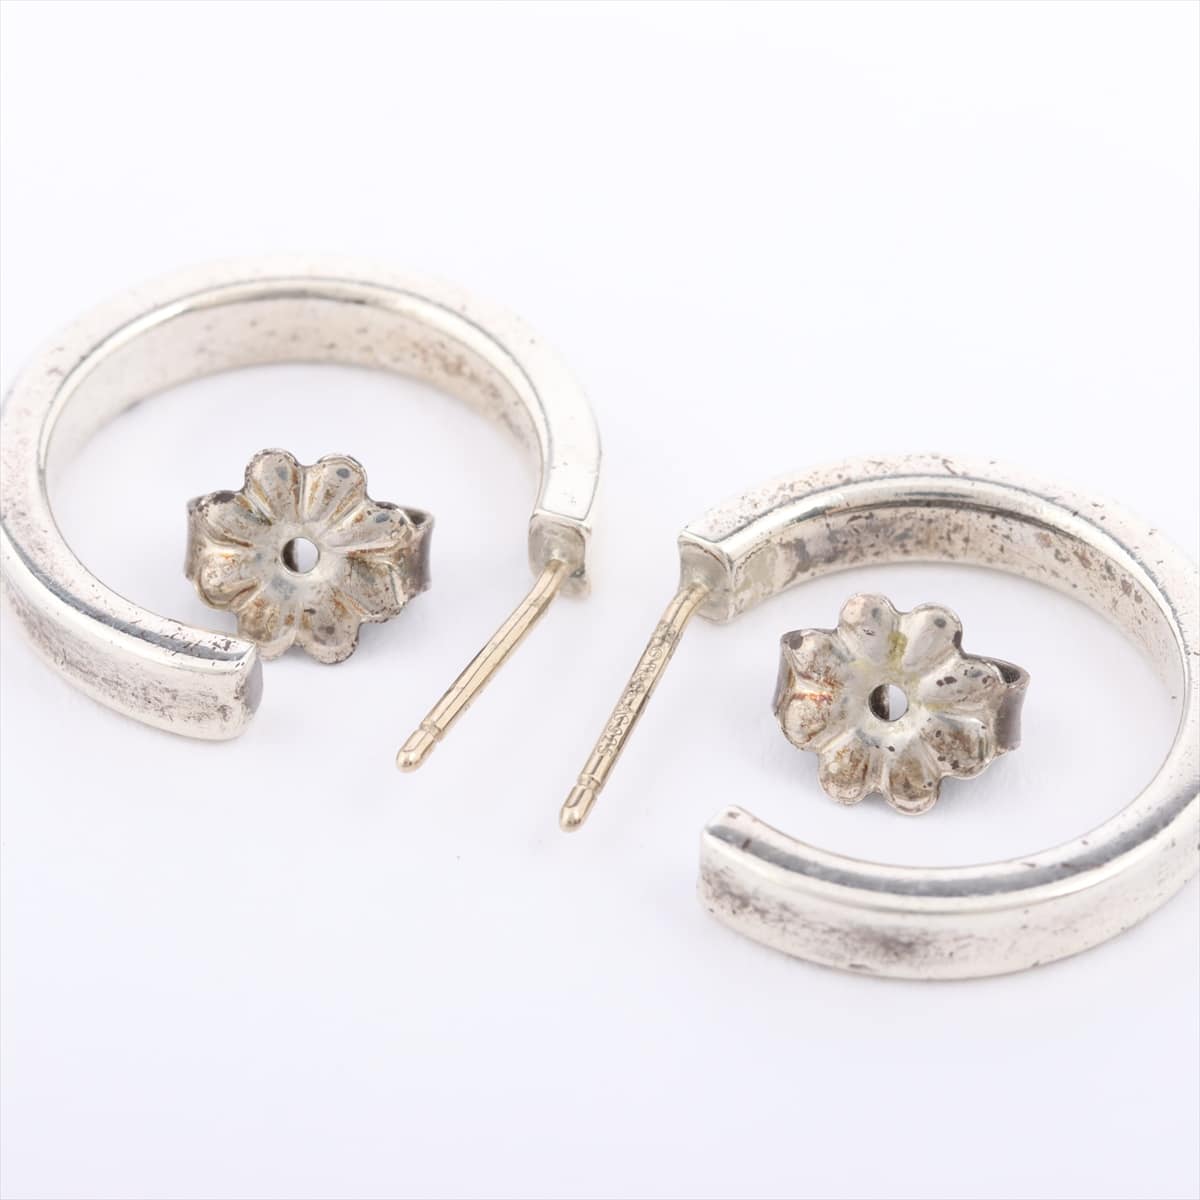 Tiffany 1837 Narrow Piercing jewelry (for both ears) 925 4.2g Silver